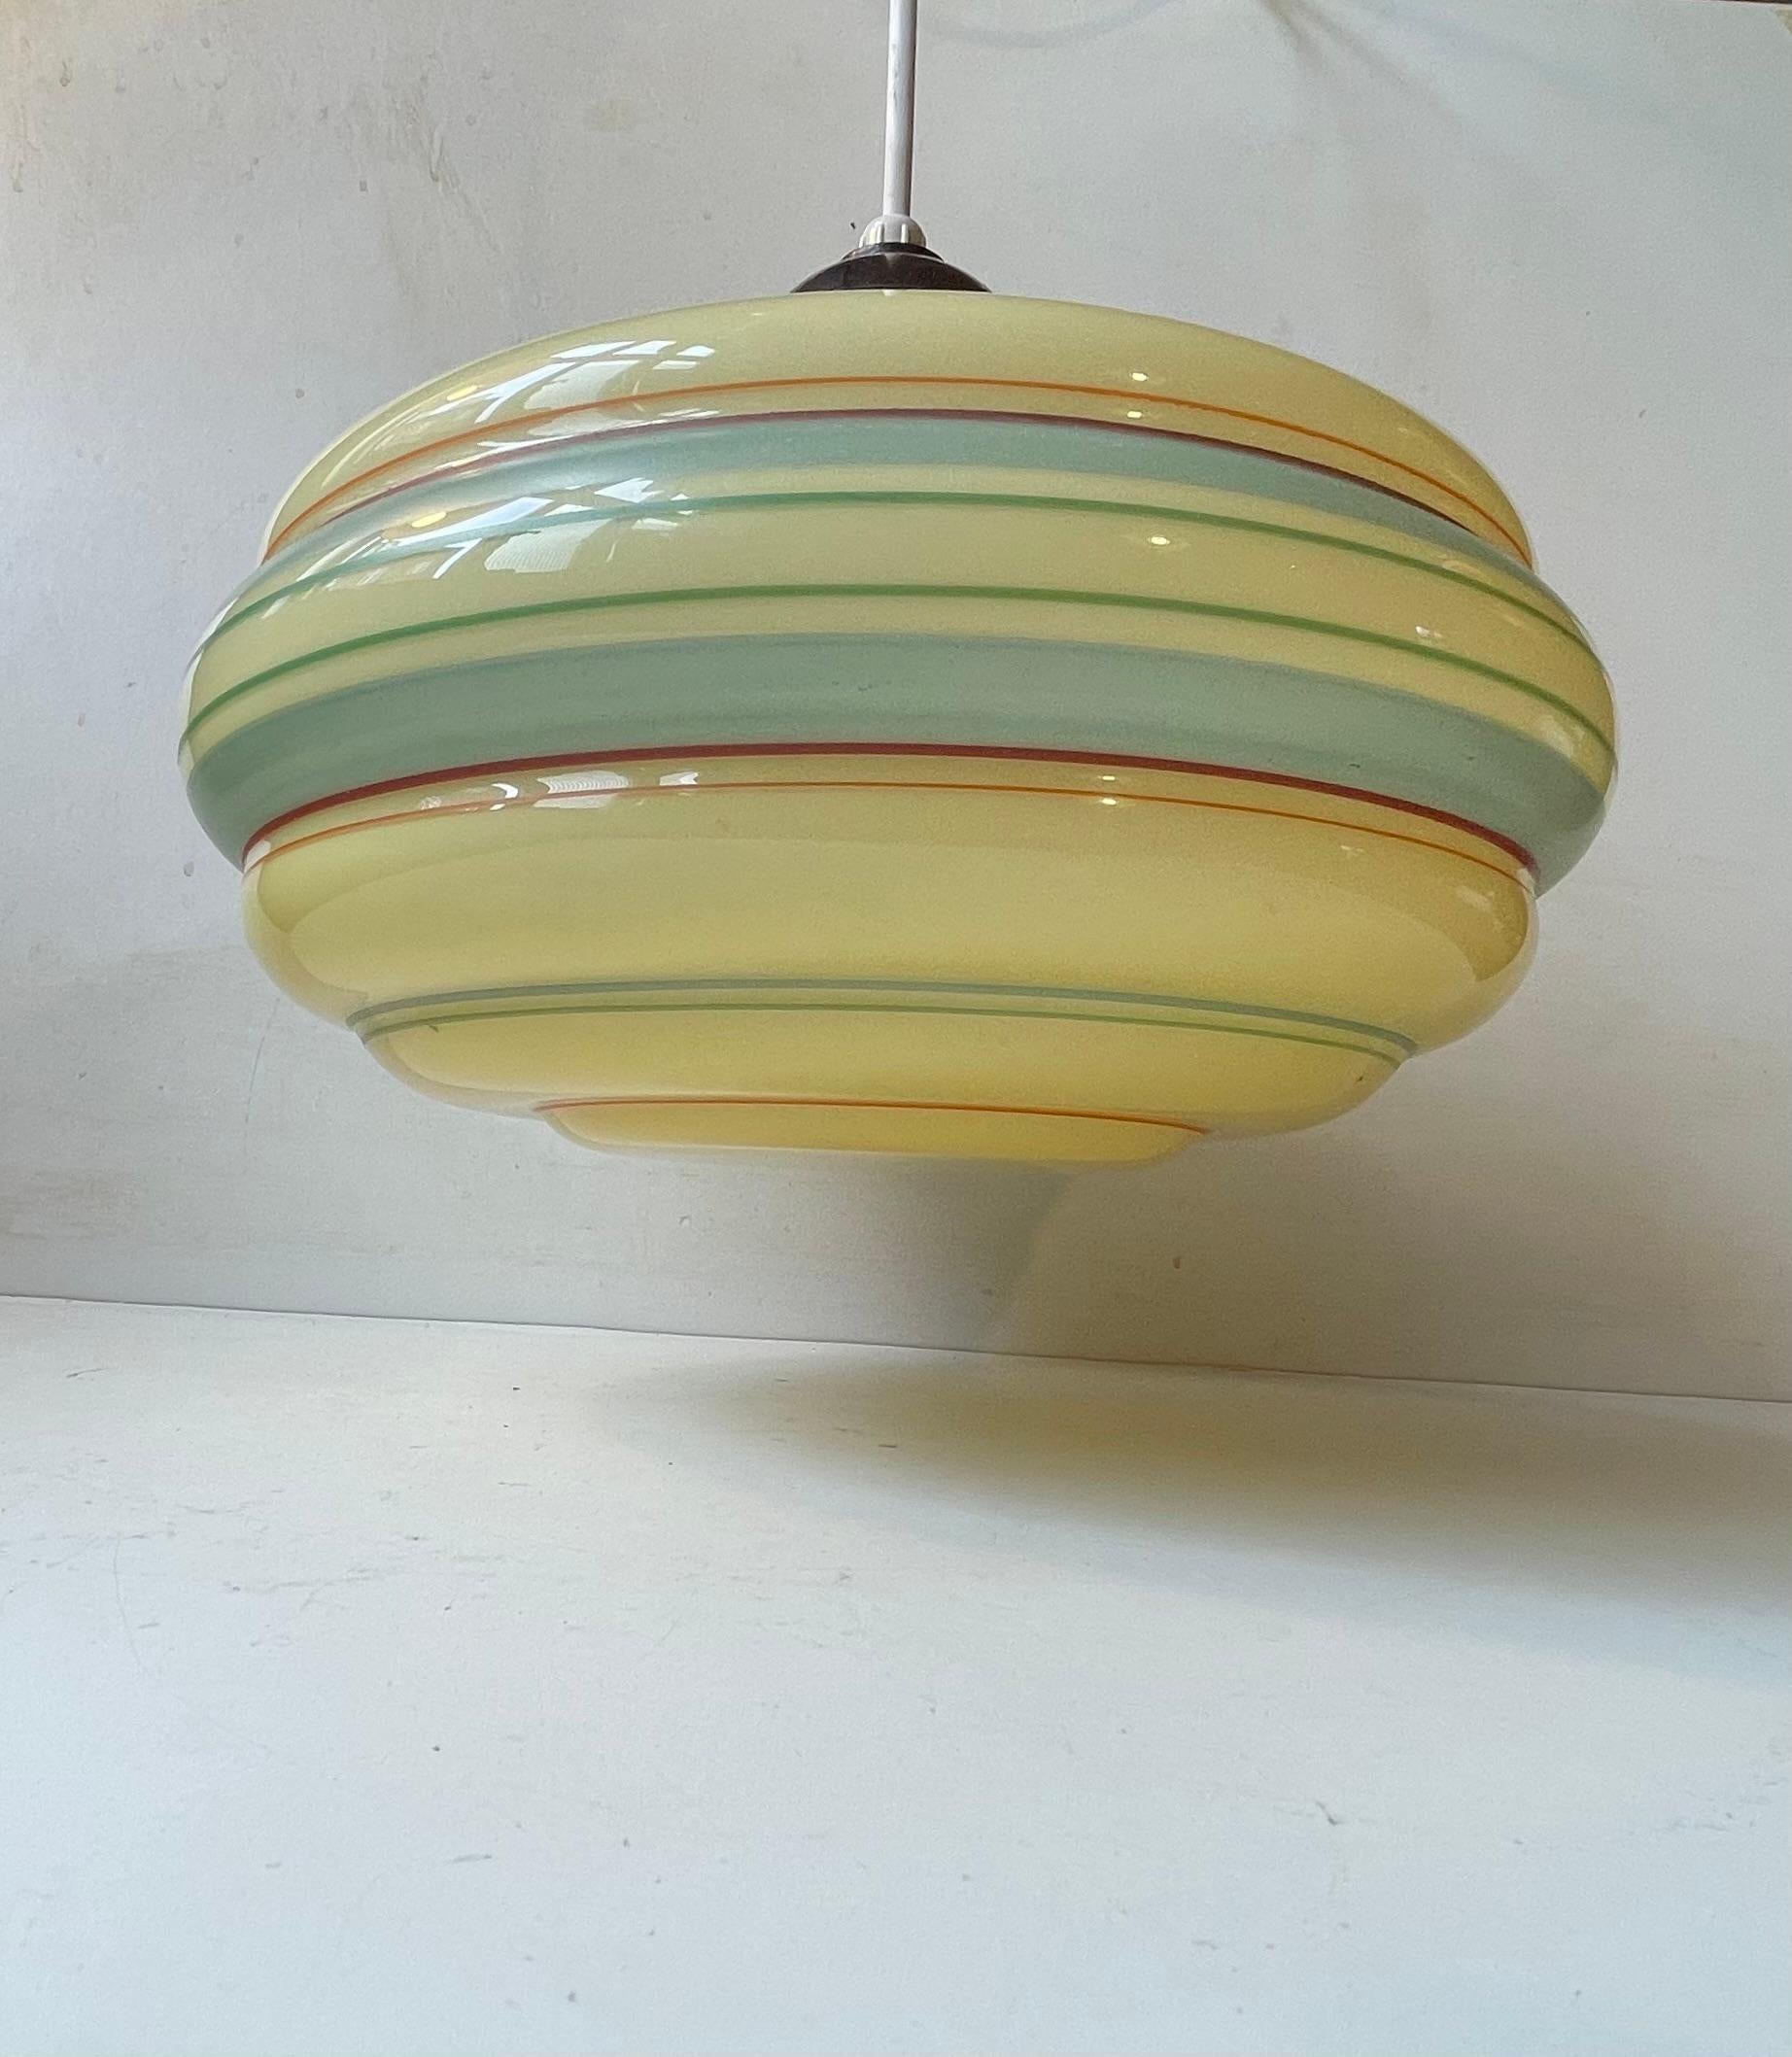 Bauhaus Danish Functionalist Pendant Lamp in Striped Opaline Glass, 1930s For Sale